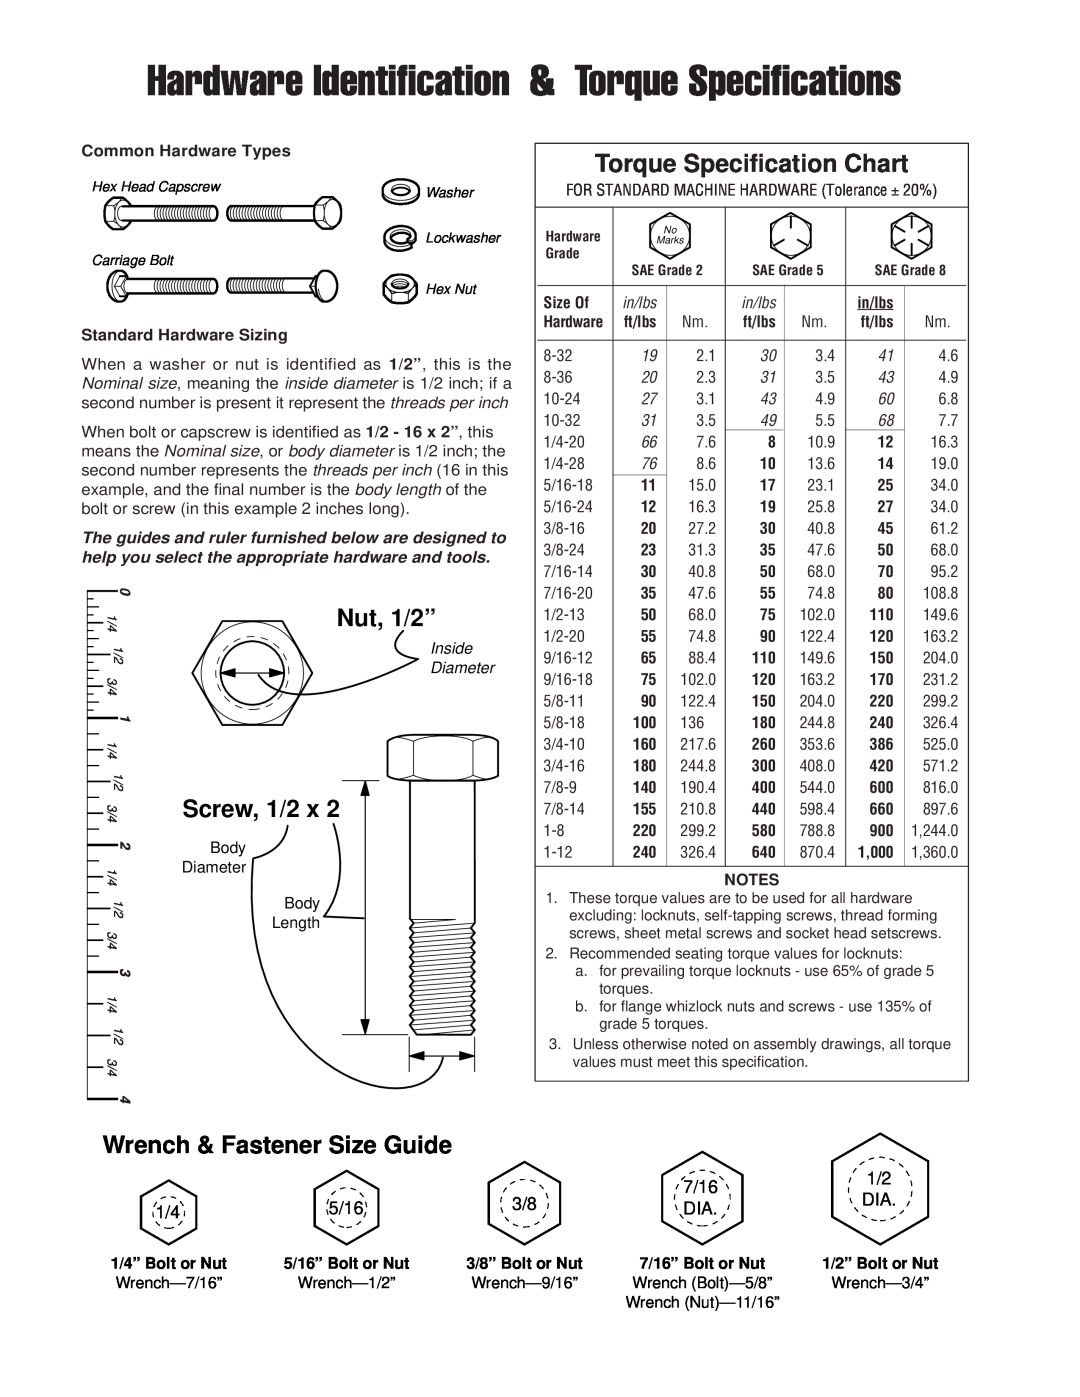 Simplicity 1694238 Hardware Identification & Torque Specifications, Torque Specification Chart, Nut, 1/2”, Screw, 1/2 